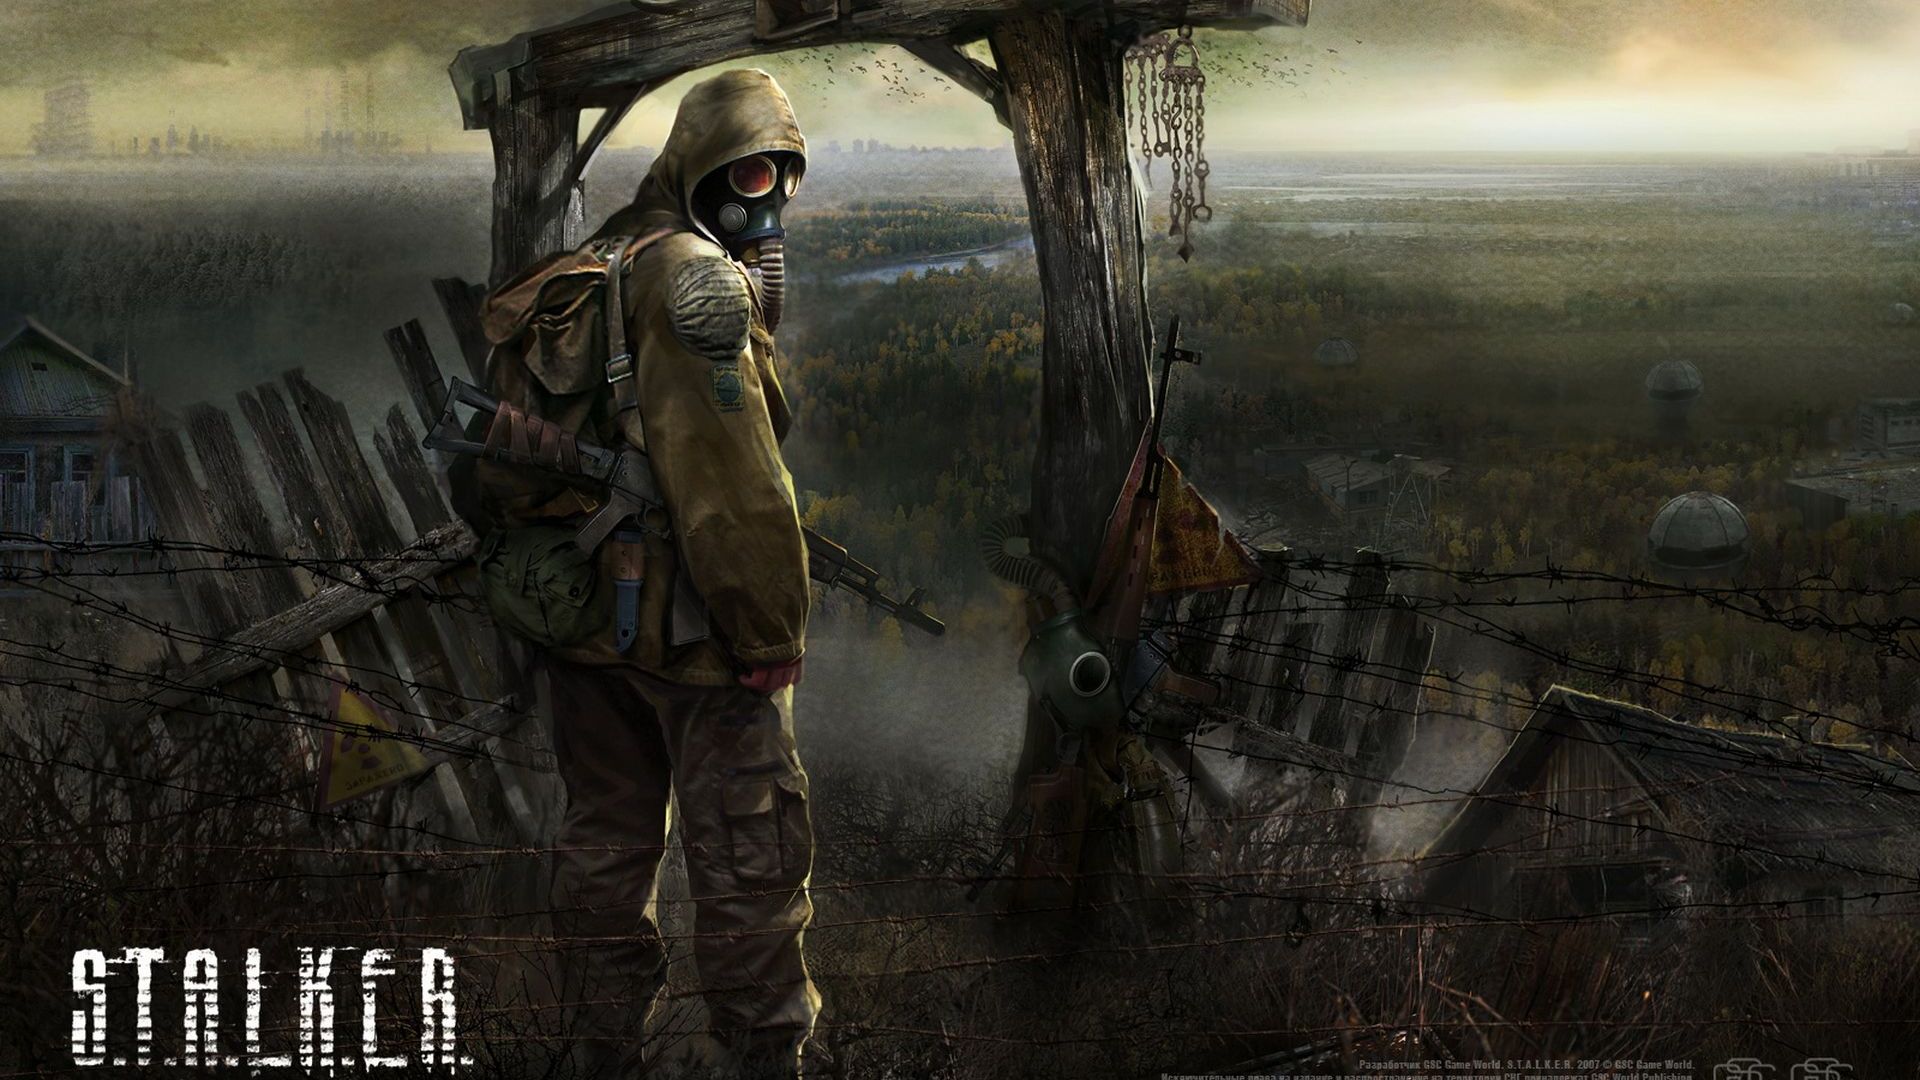 S.T.A.L.K.E.R. 2: Heart of Chornobyl recebe novo trailer de gameplay